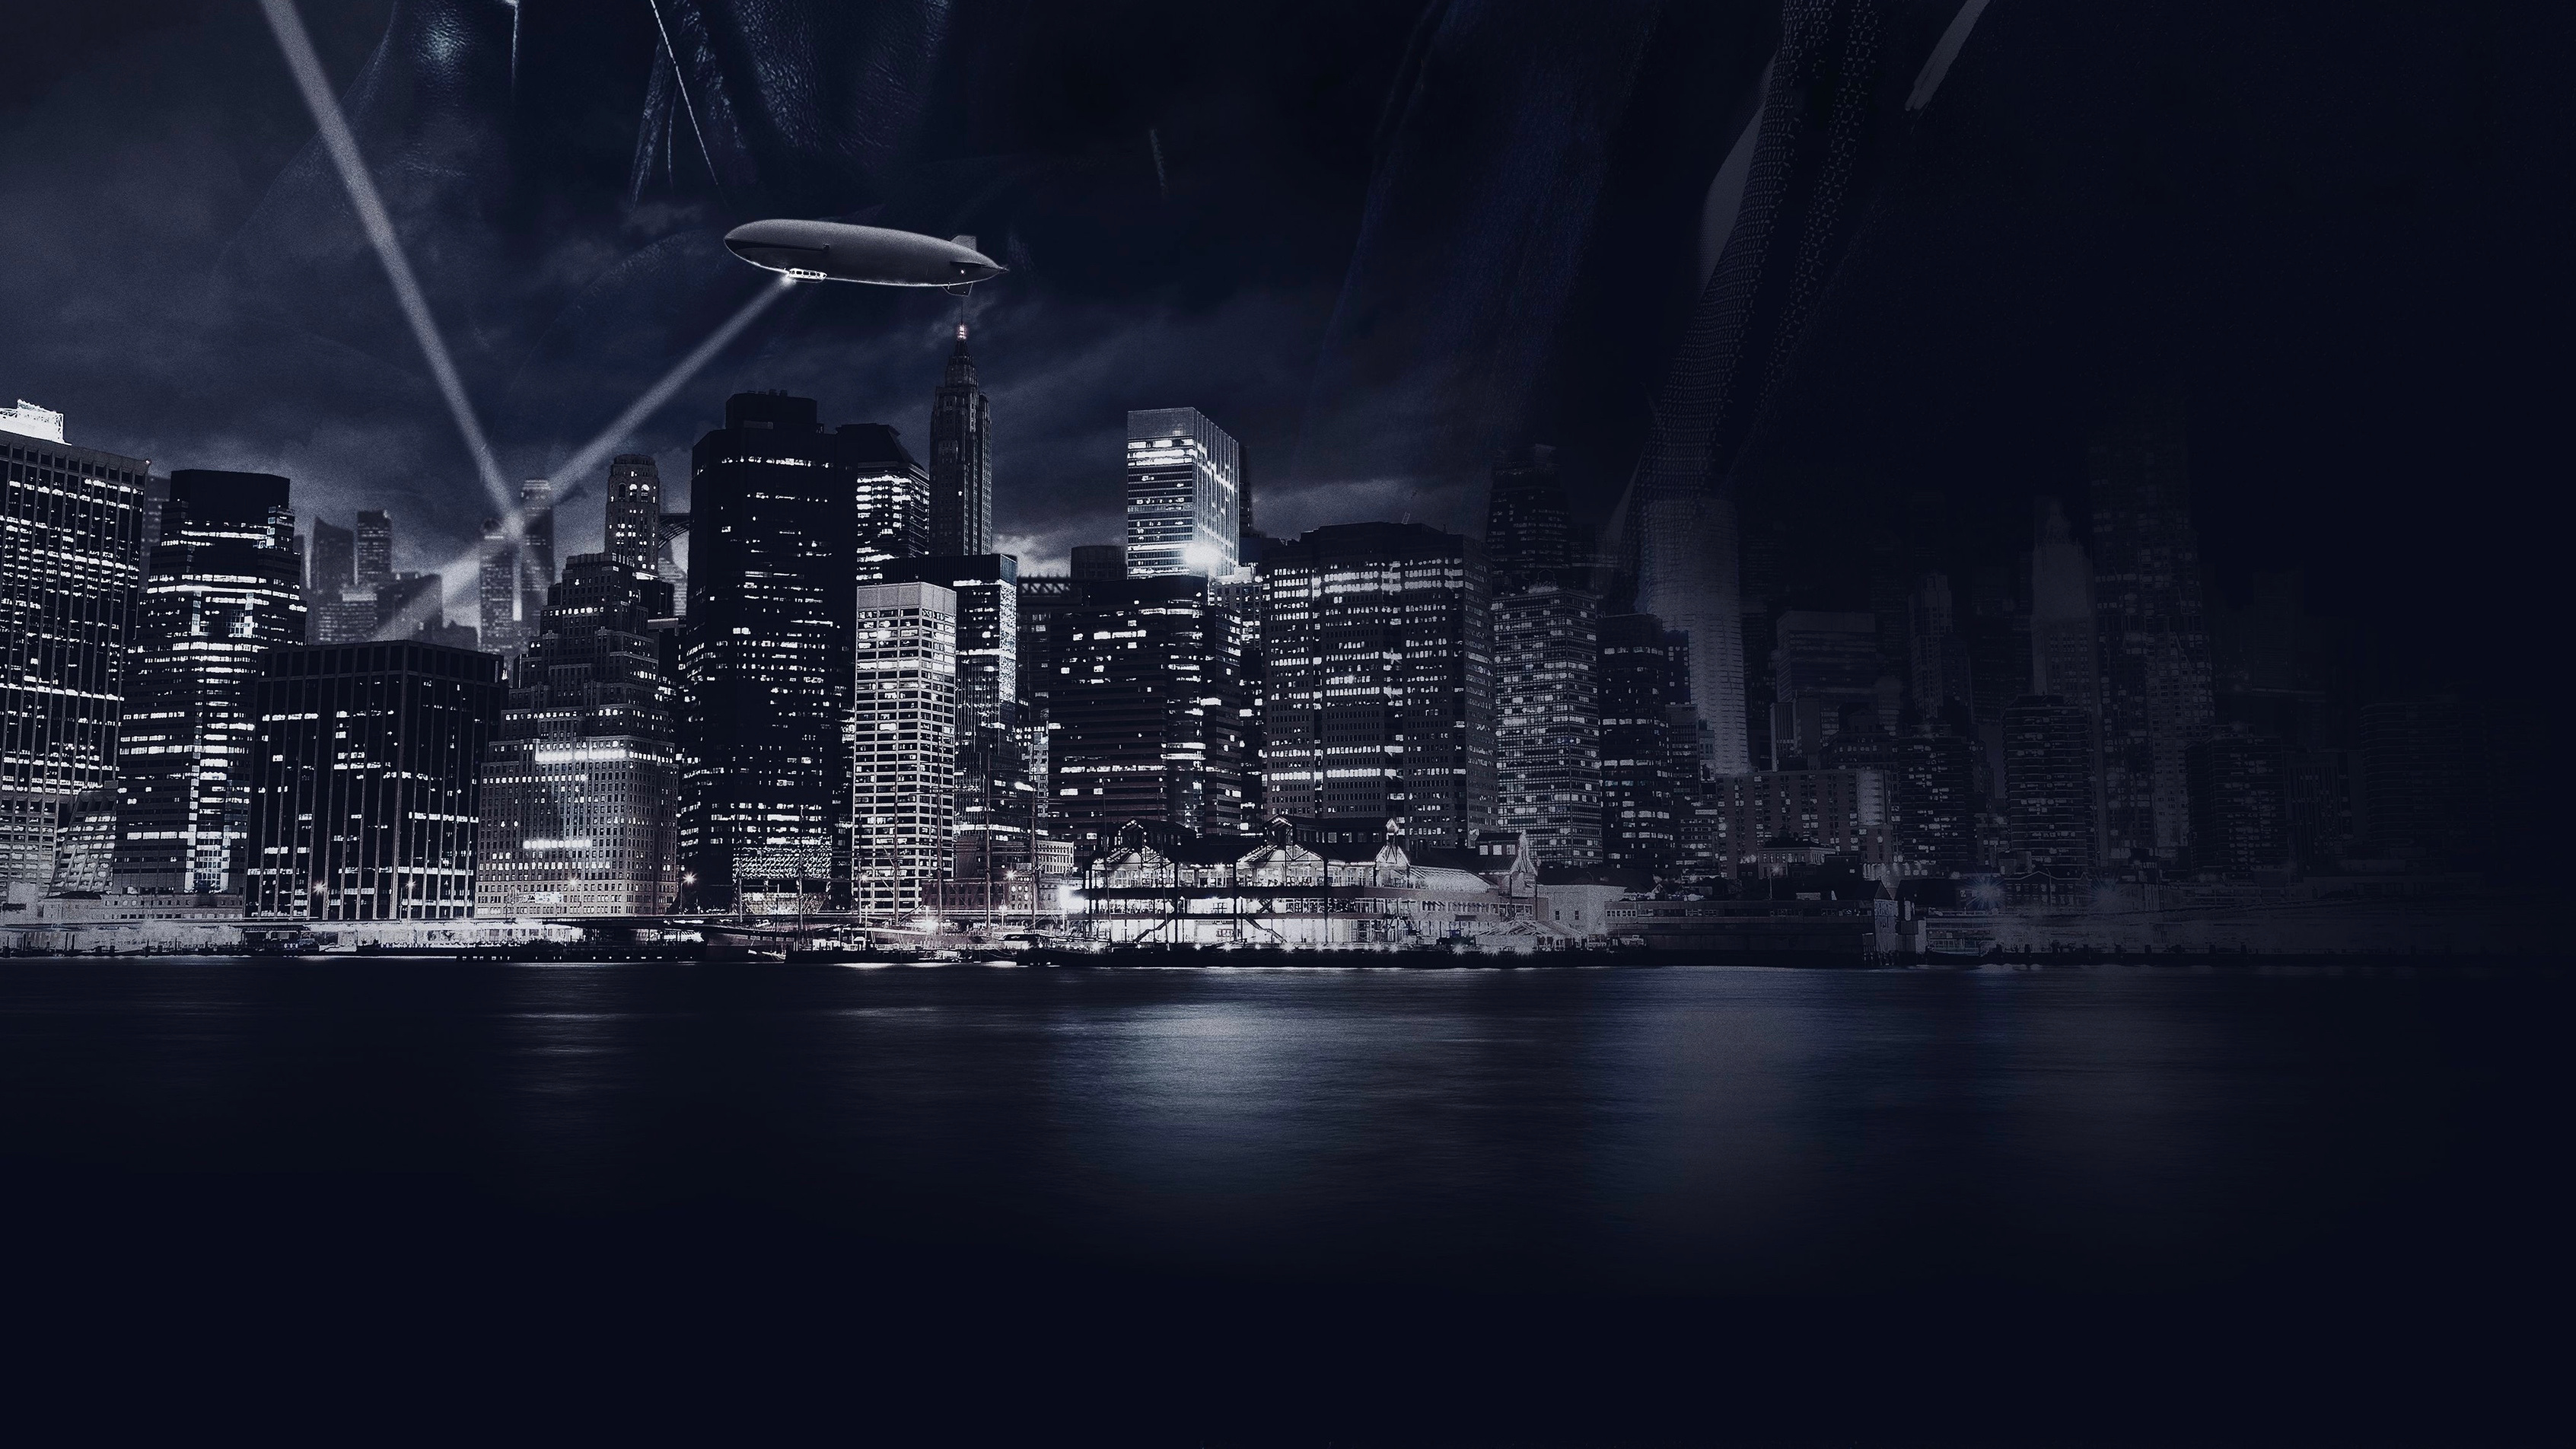 Gotham City movies, High-definition wallpaper, Urban setting, Gritty cinematic visuals, 3390x1910 HD Desktop